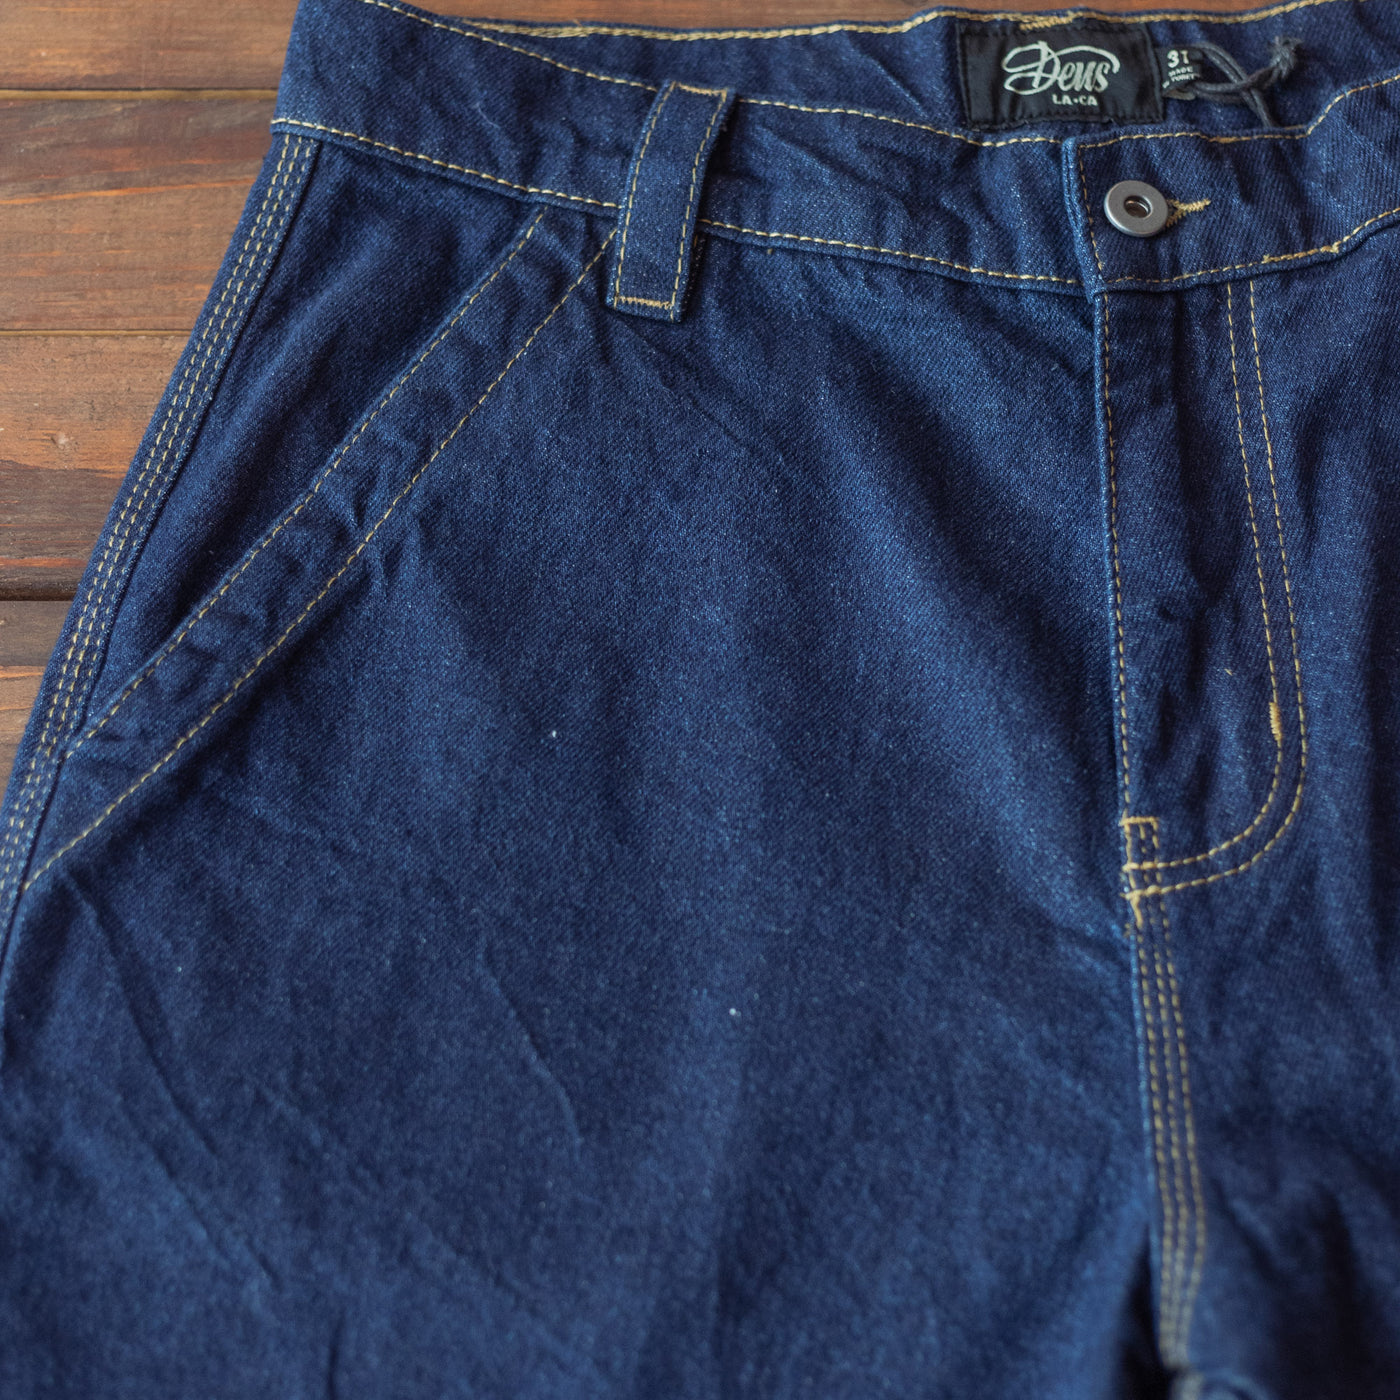 DEUS, Shawn Denim Jeans 13 OZ - Dry Indigo